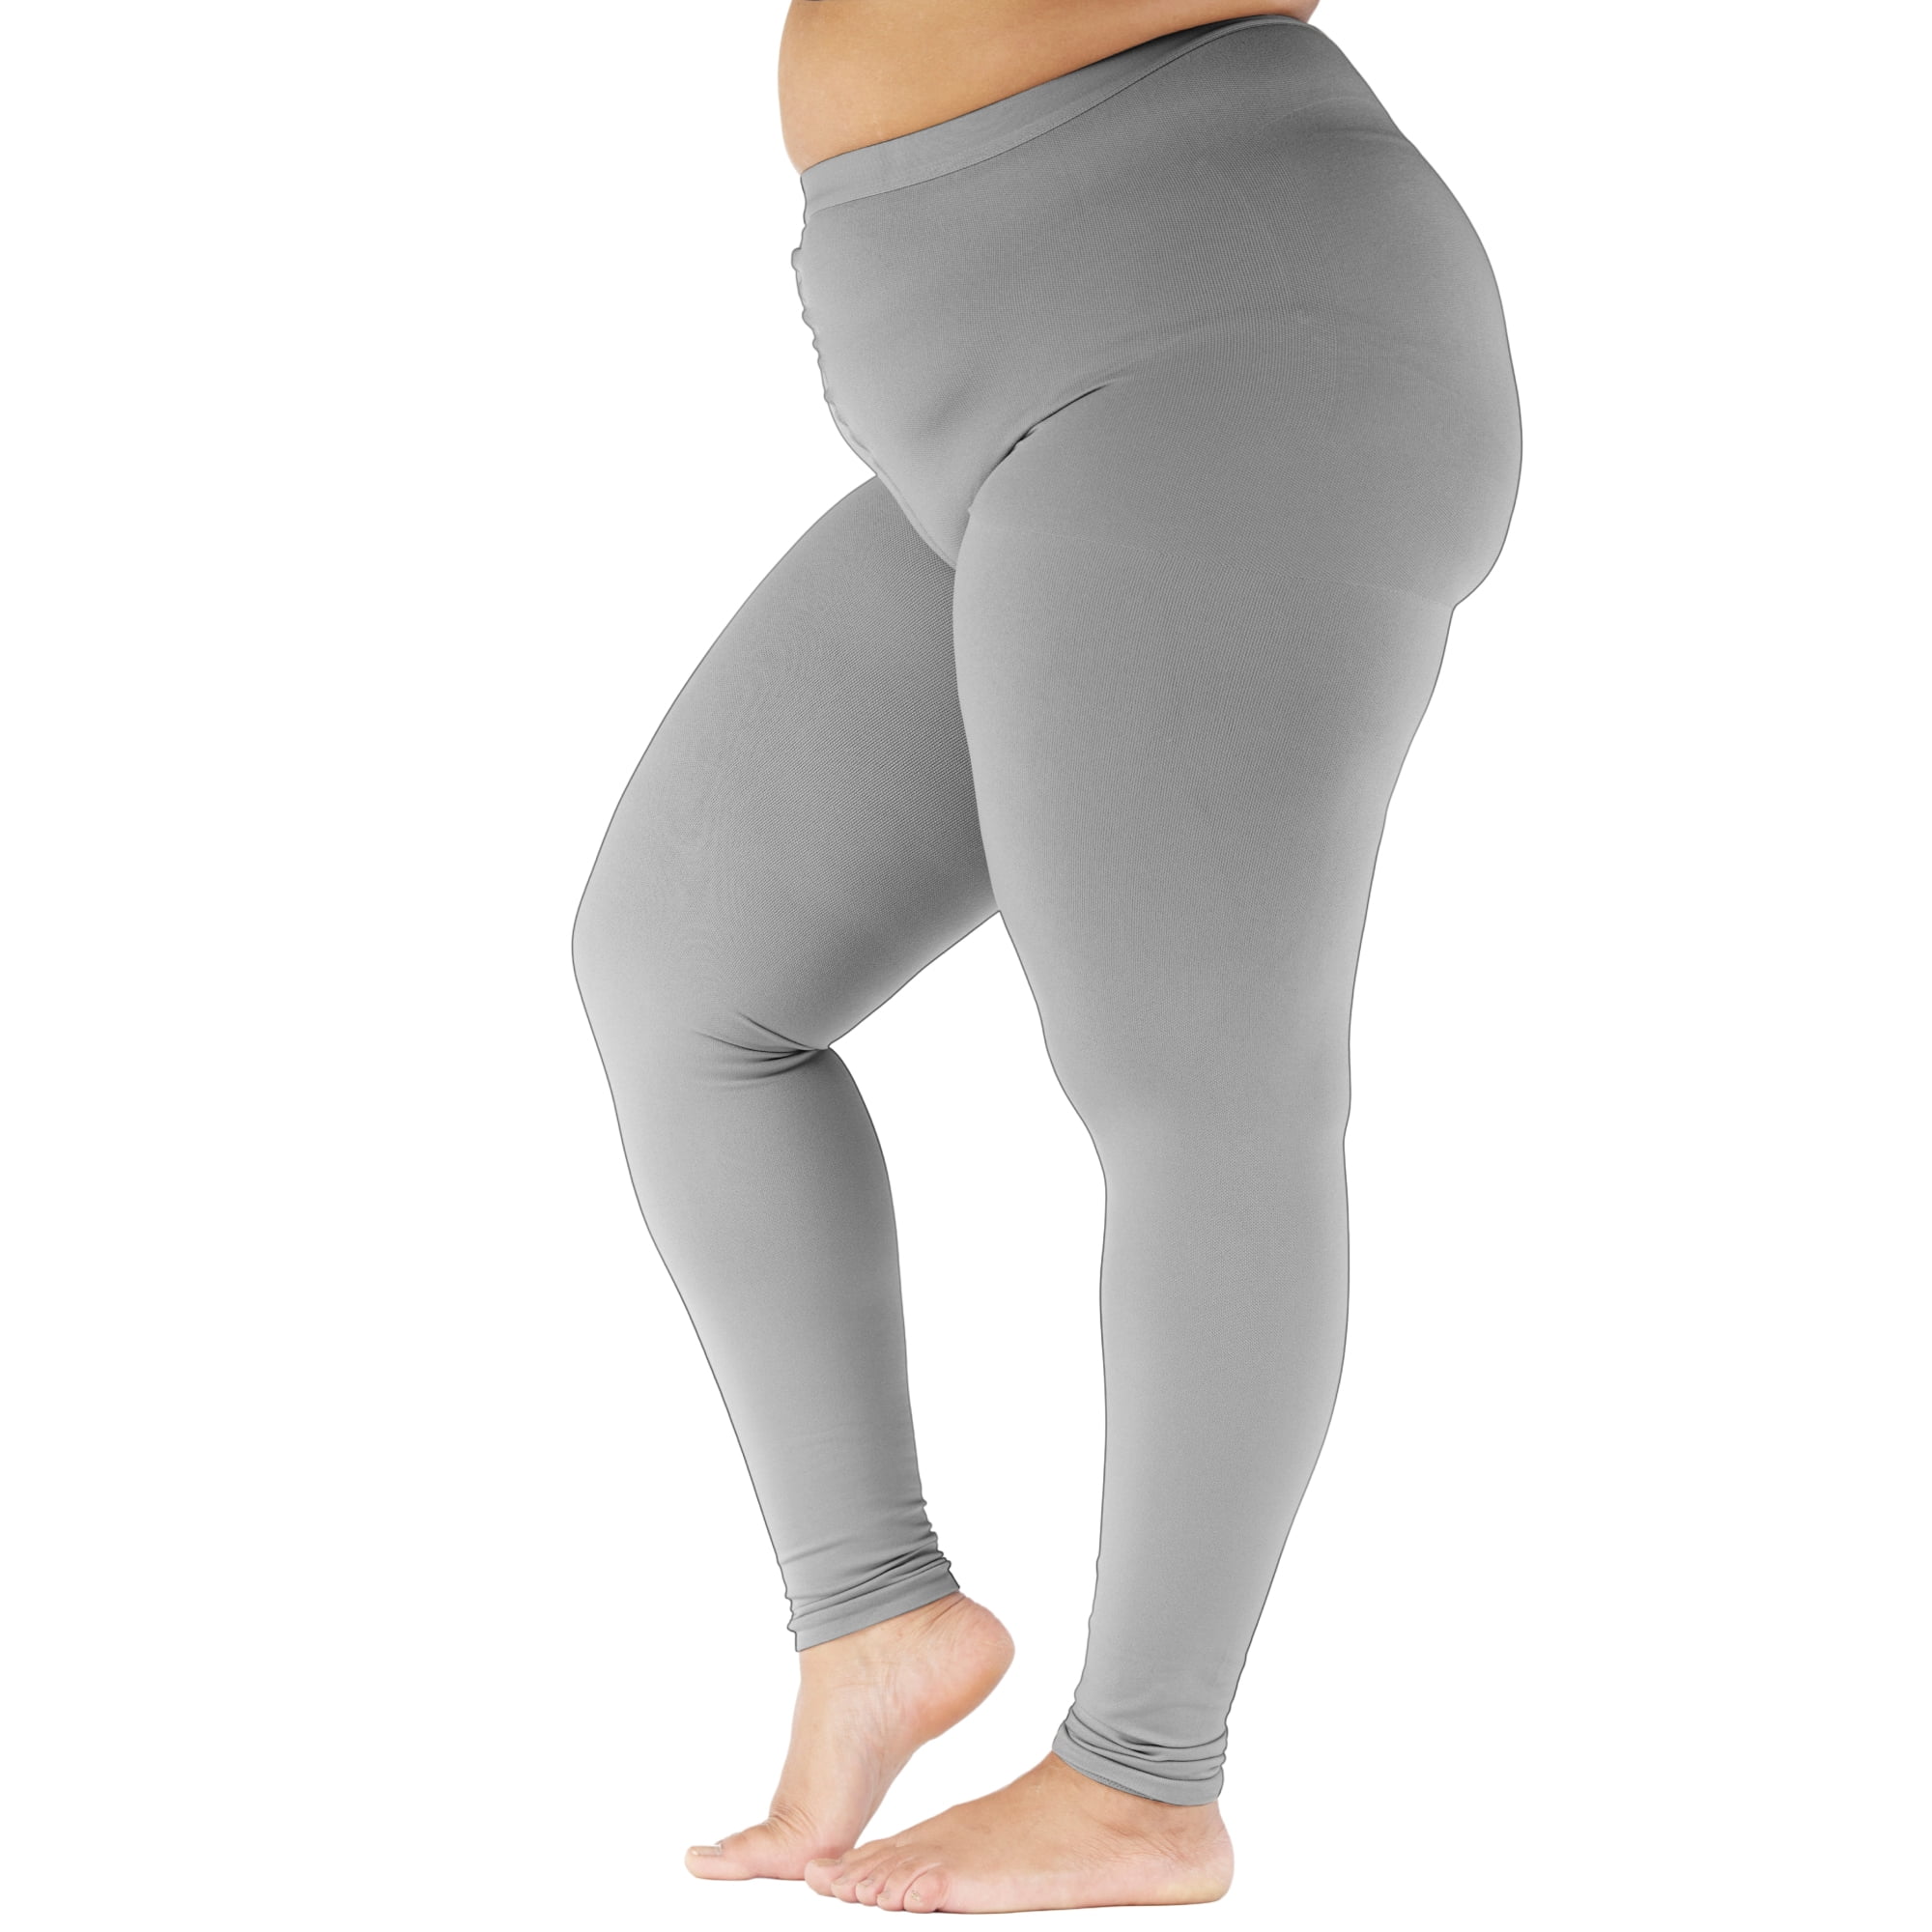 Womens Compression Leggings 20-30mmHg for Swelling & Edema - Grey